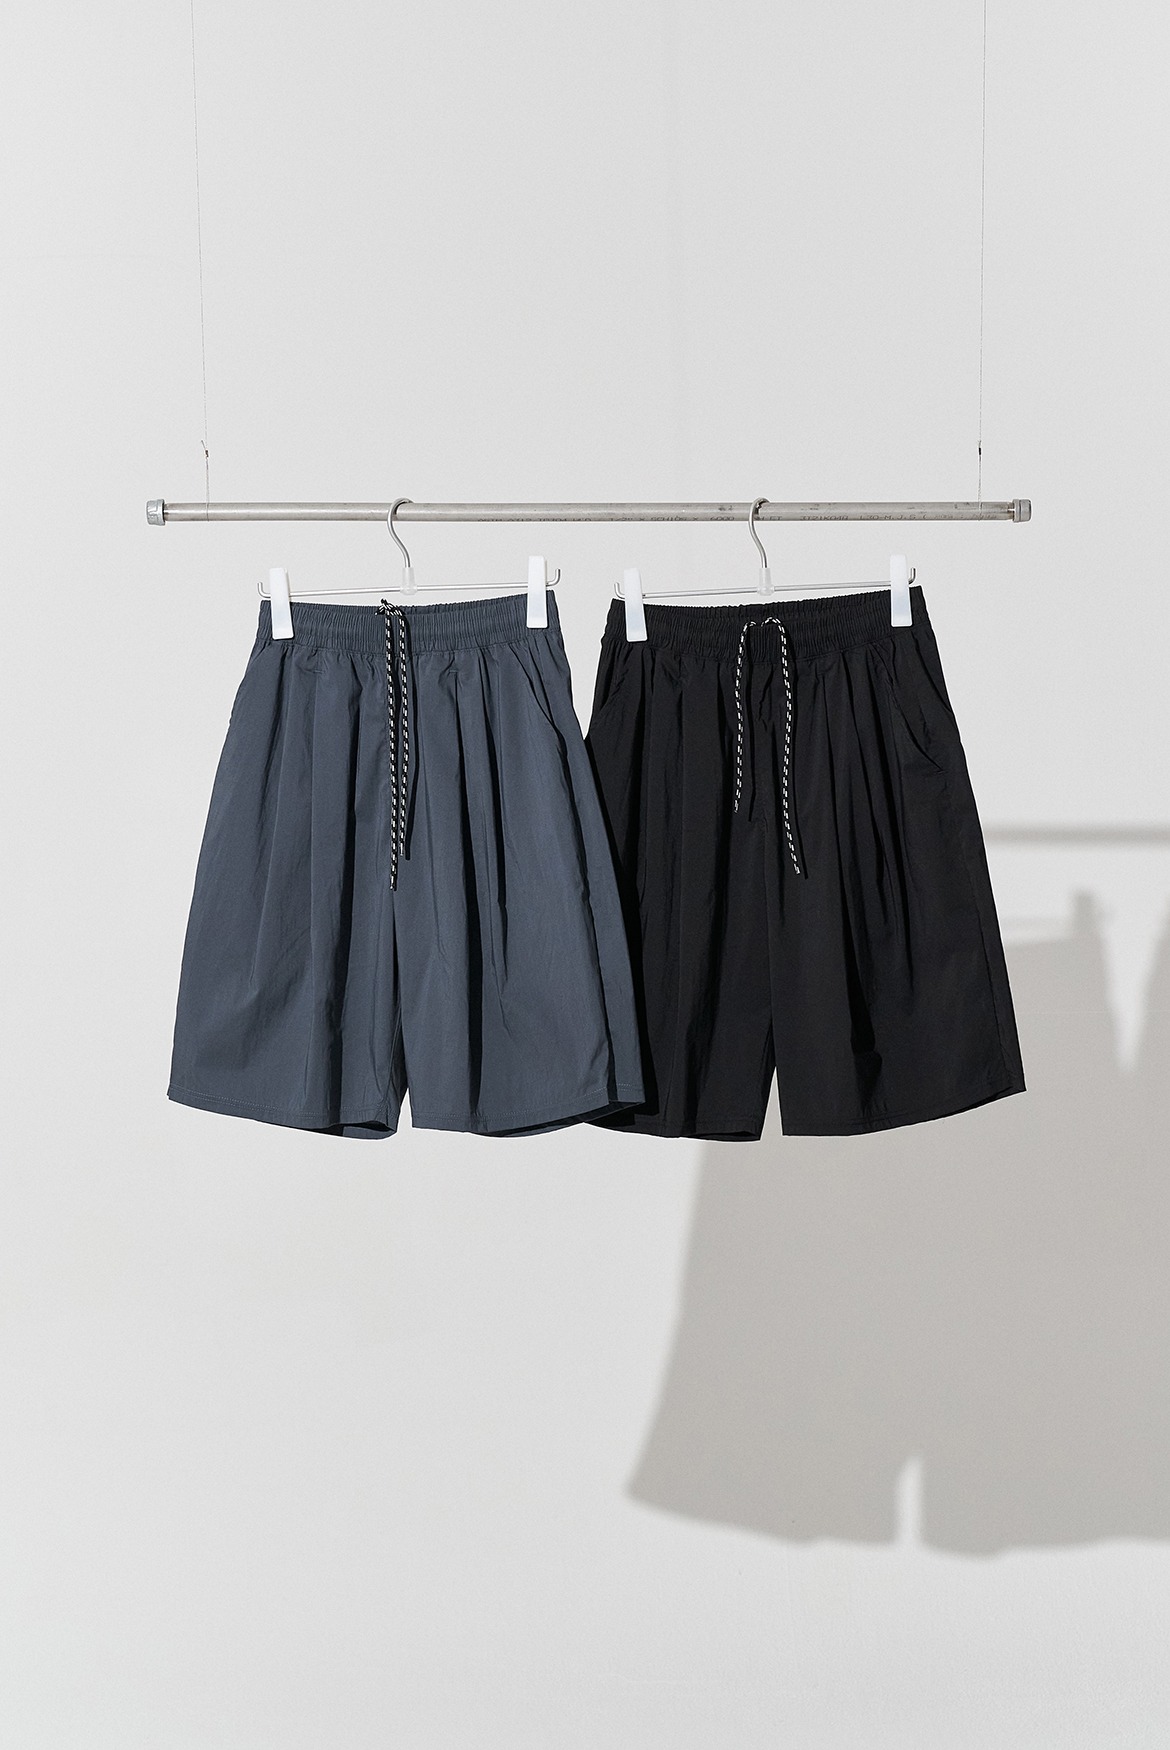 Two Tuck Nylon Banding Shorts [2 Colors]